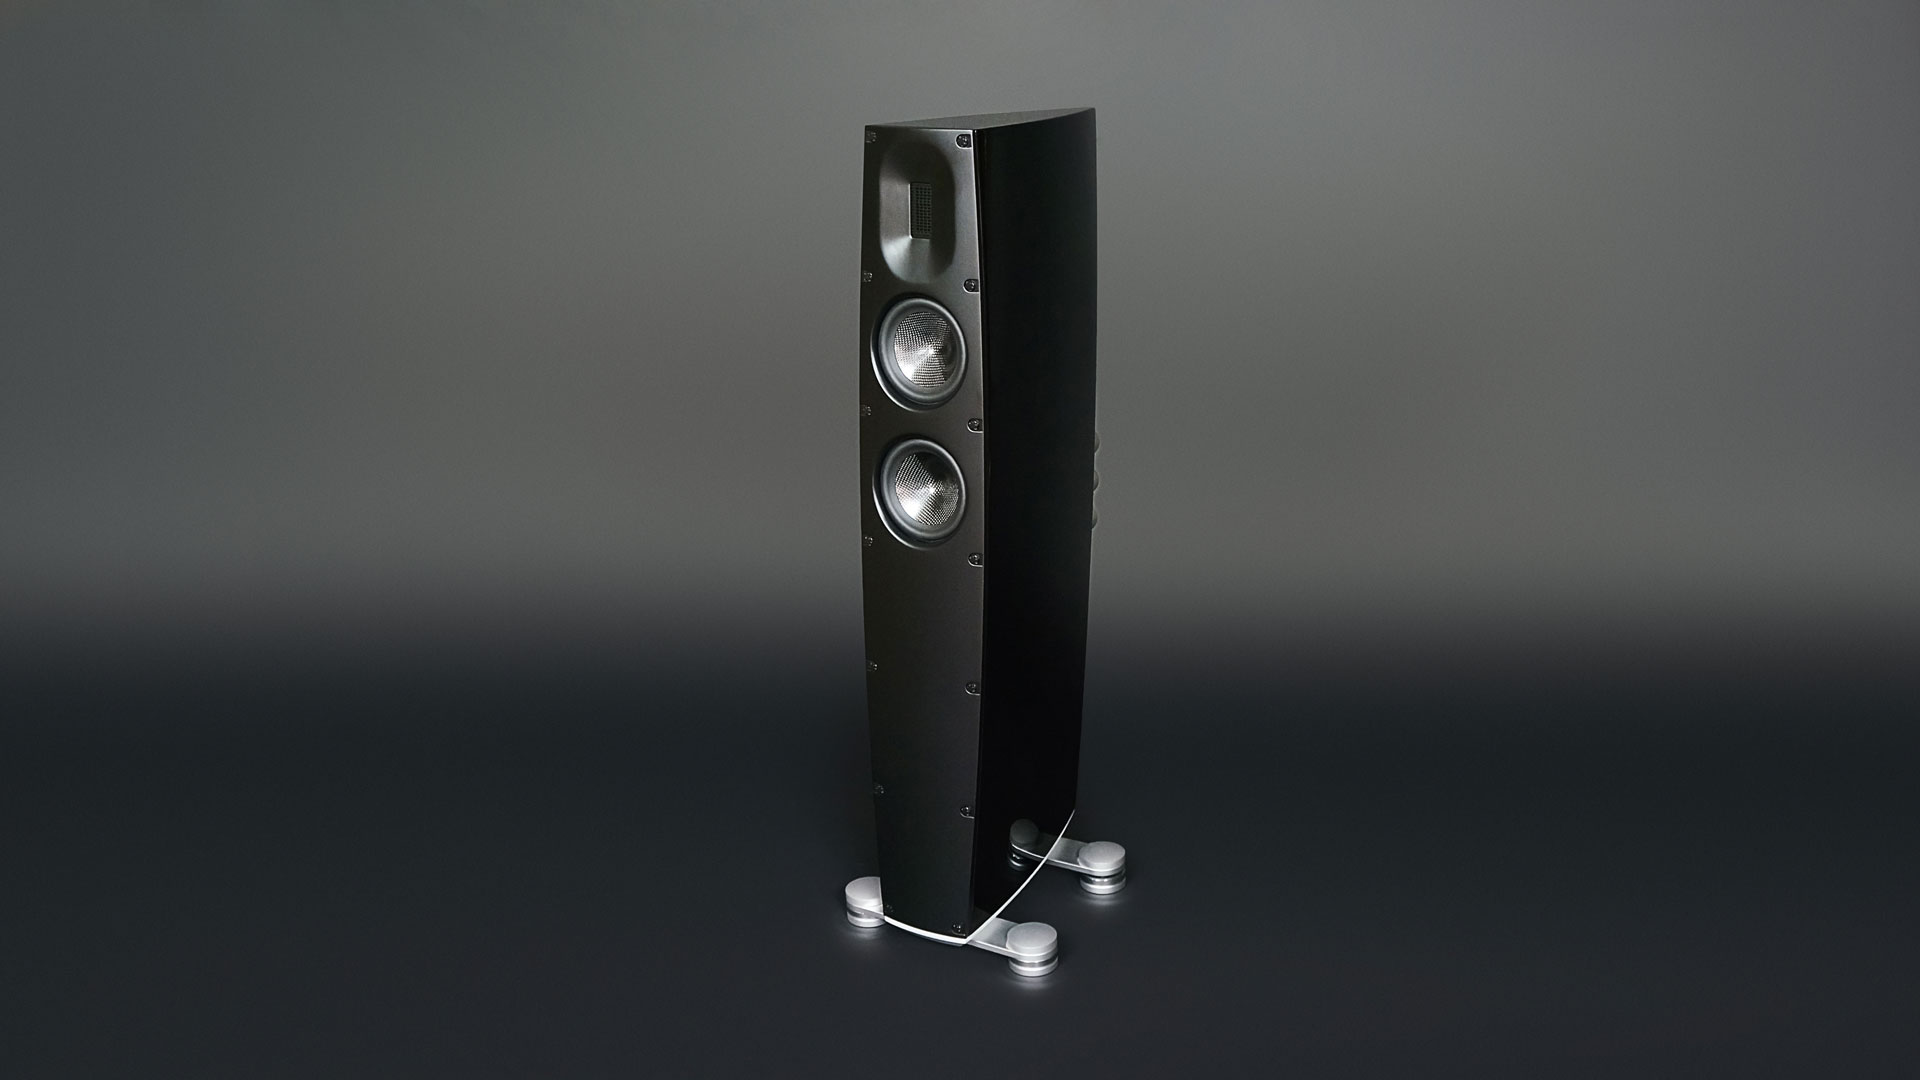 Floorstanding speakers Scansonic Q3 frontal view
(Image Credit: Scansonic/Dantax)